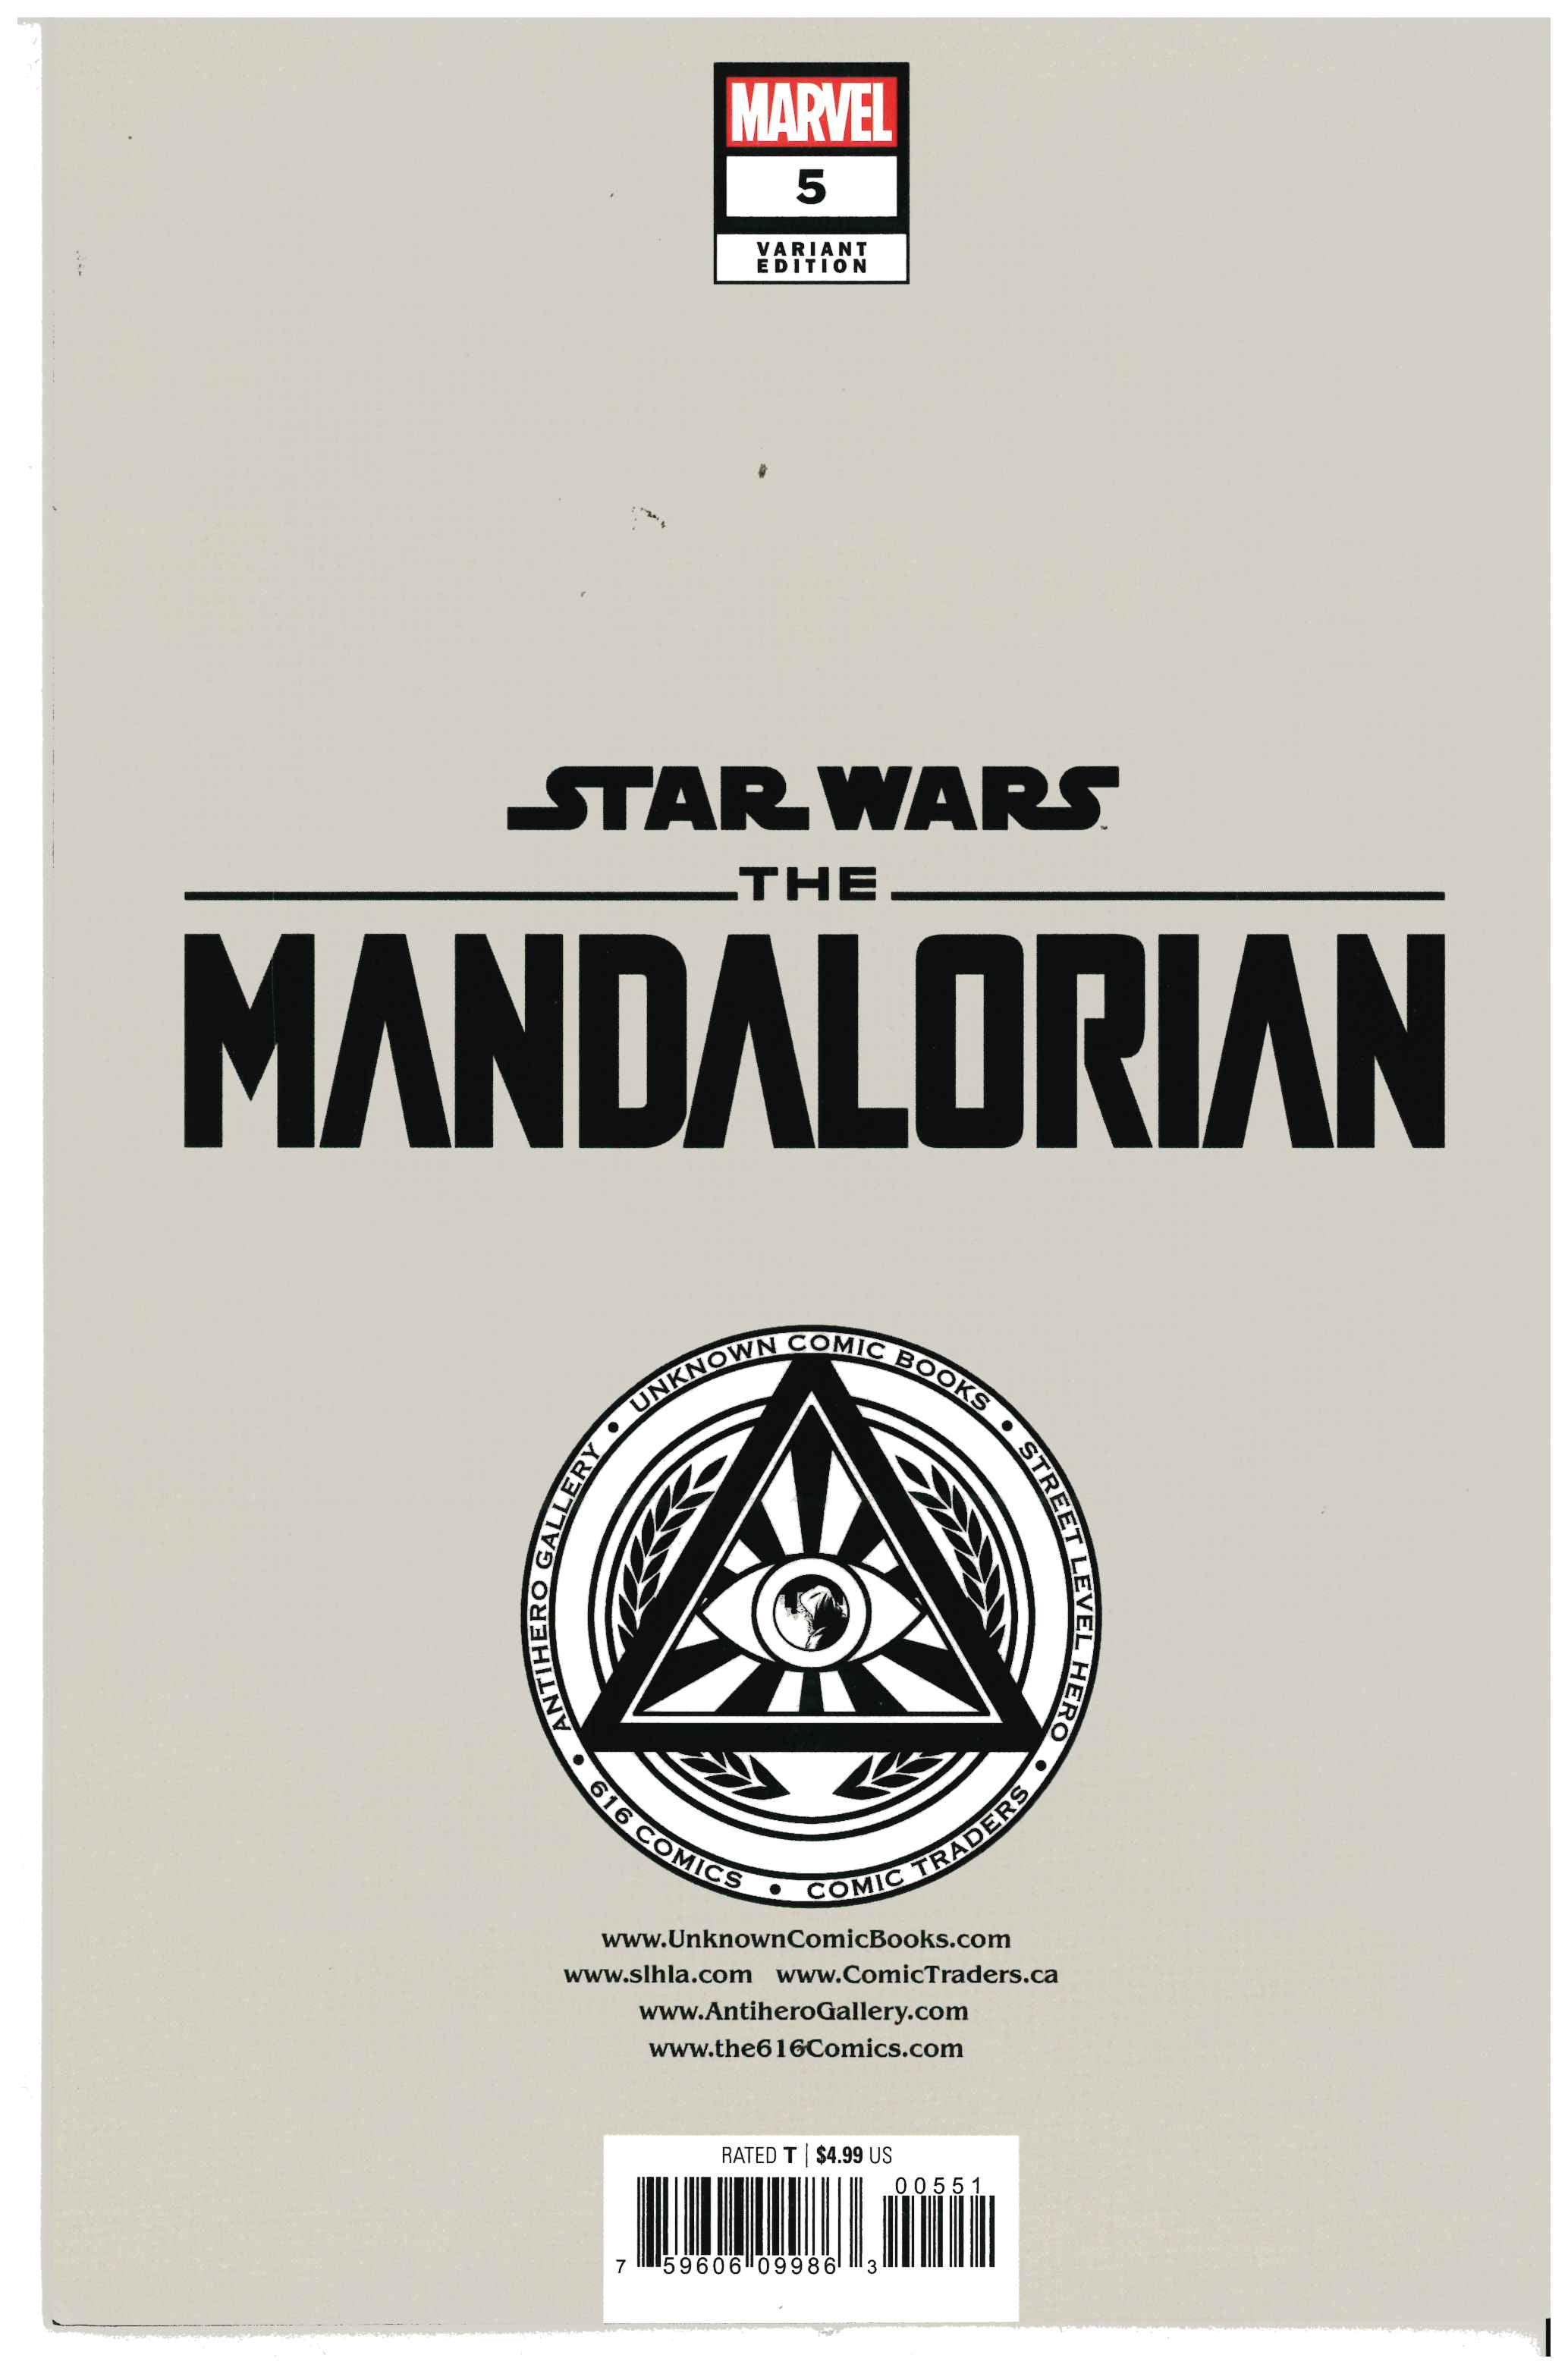 Star Wars: The Mandalorian #5 backside